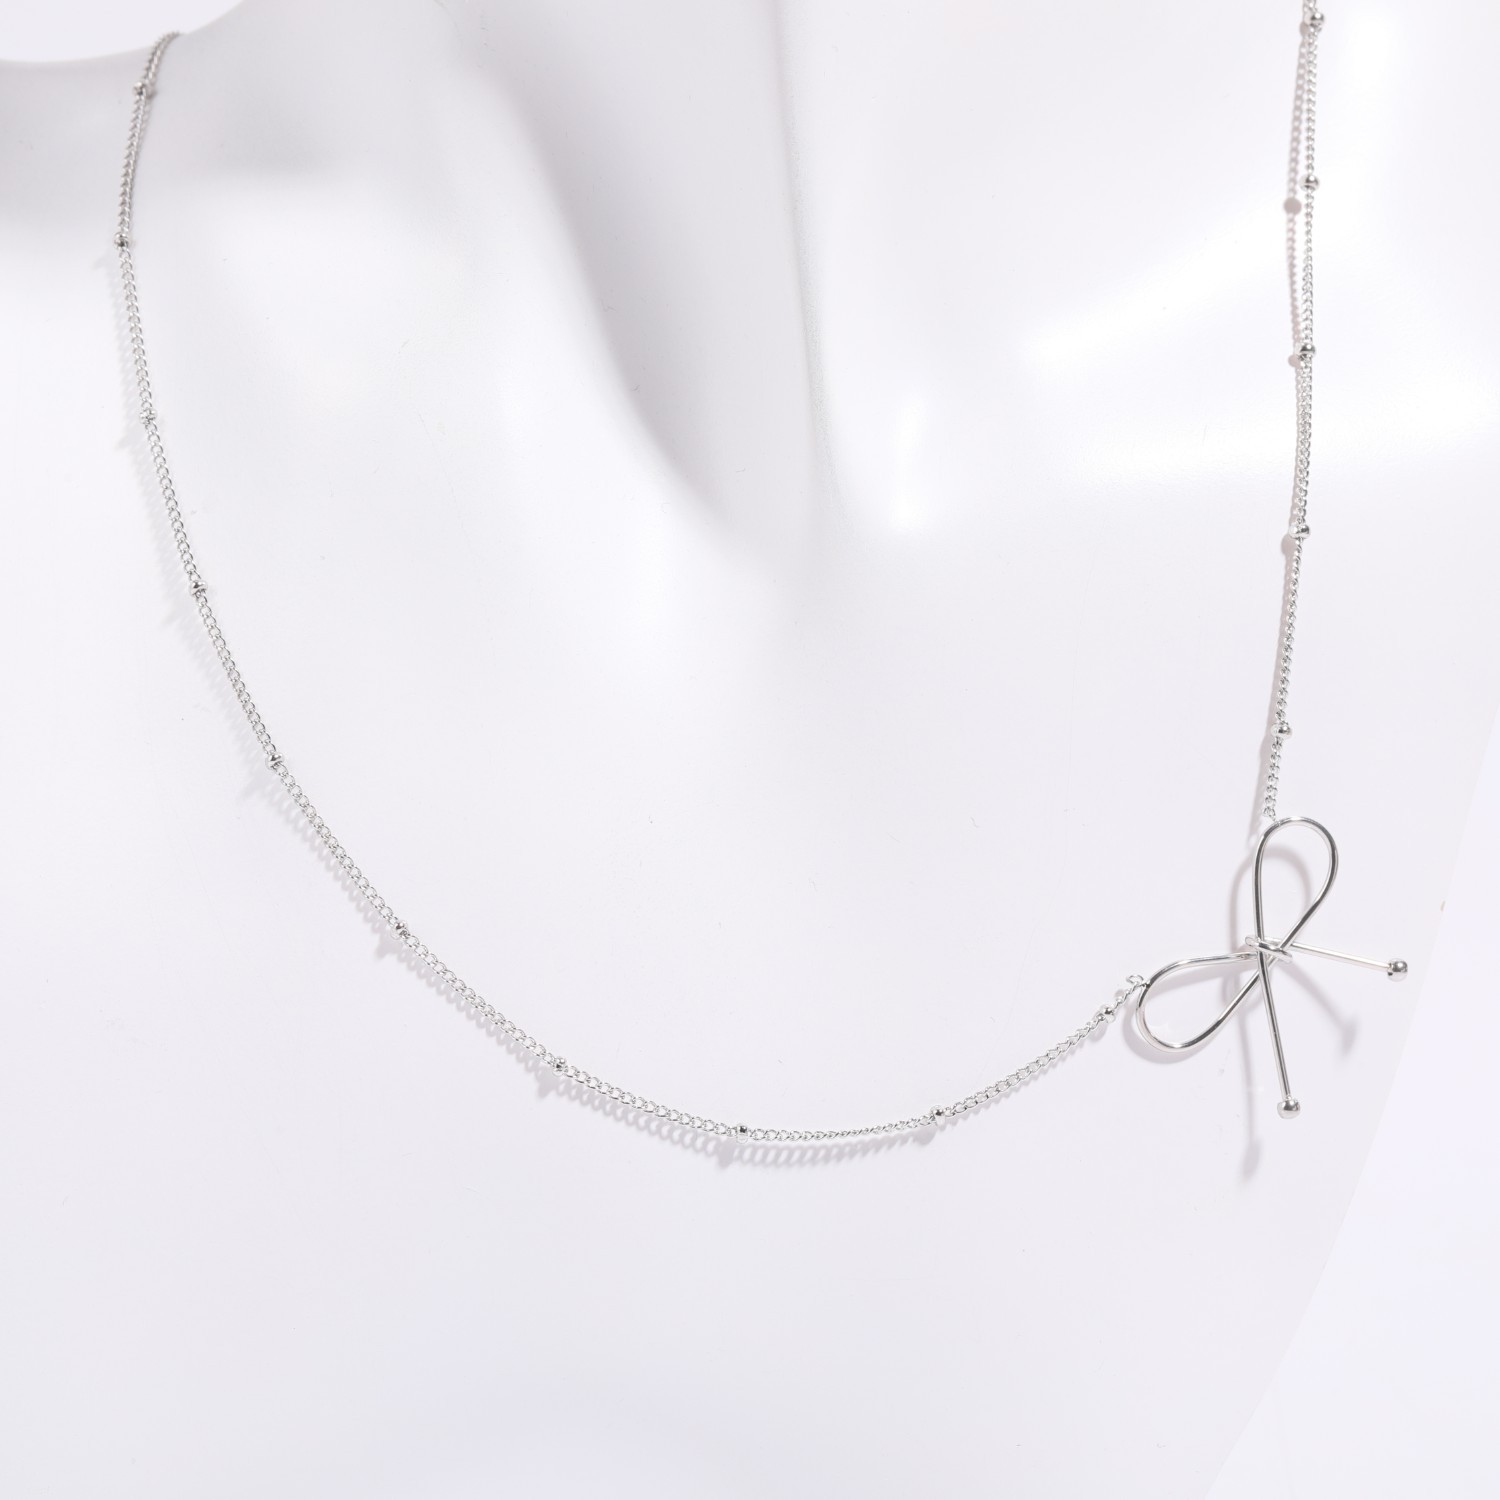 2:Steel necklace 35x5cm